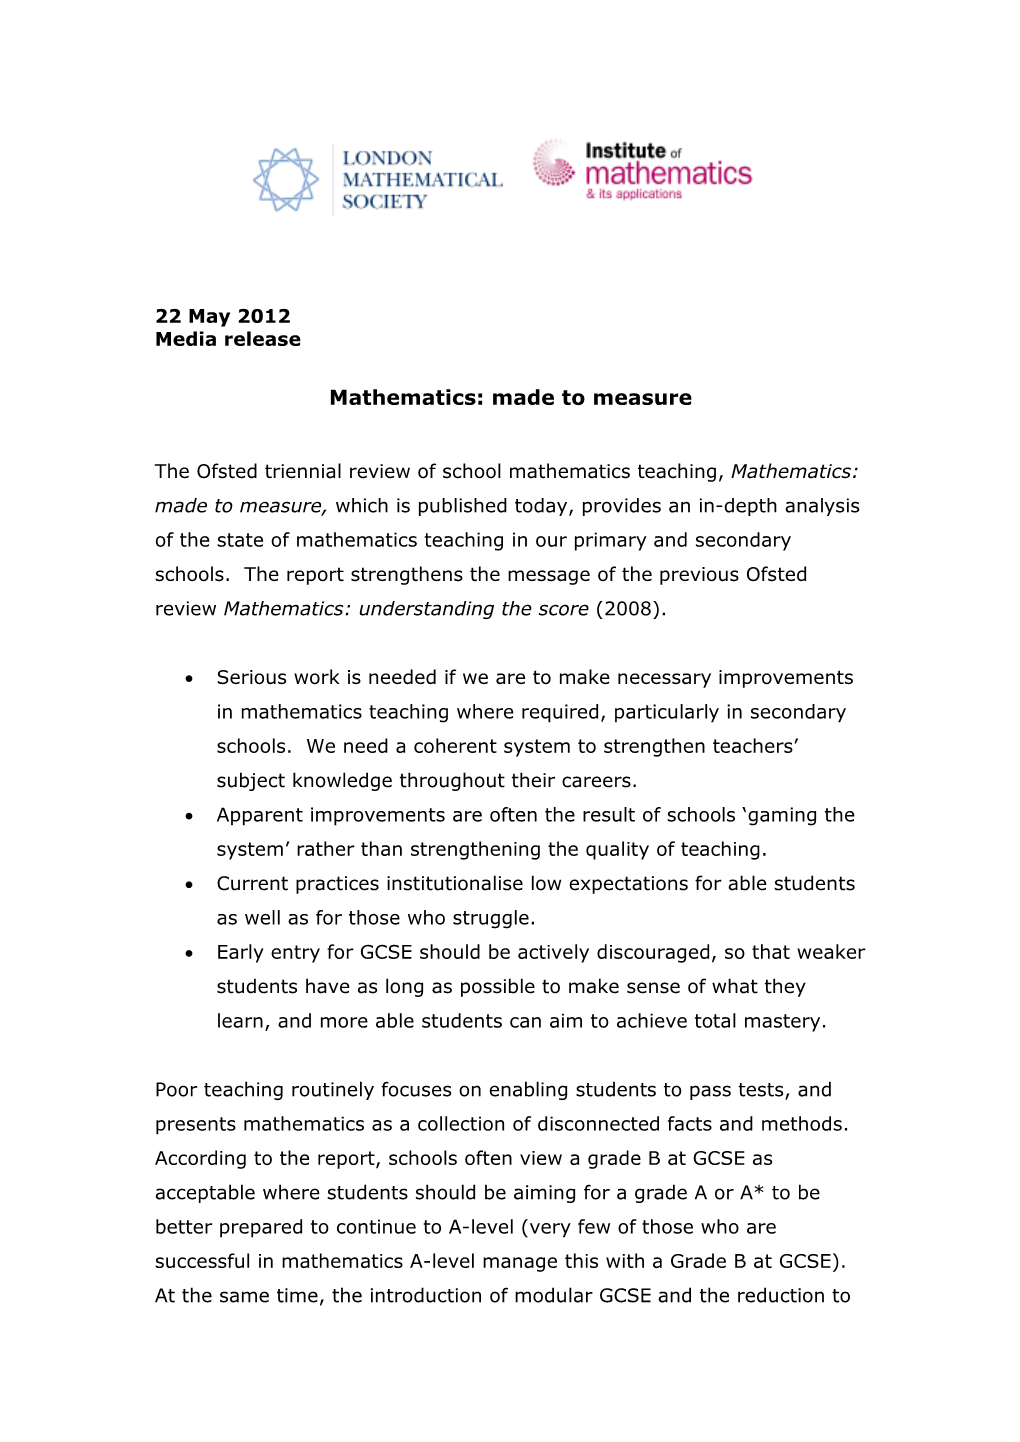 Mathematics: Made to Measure